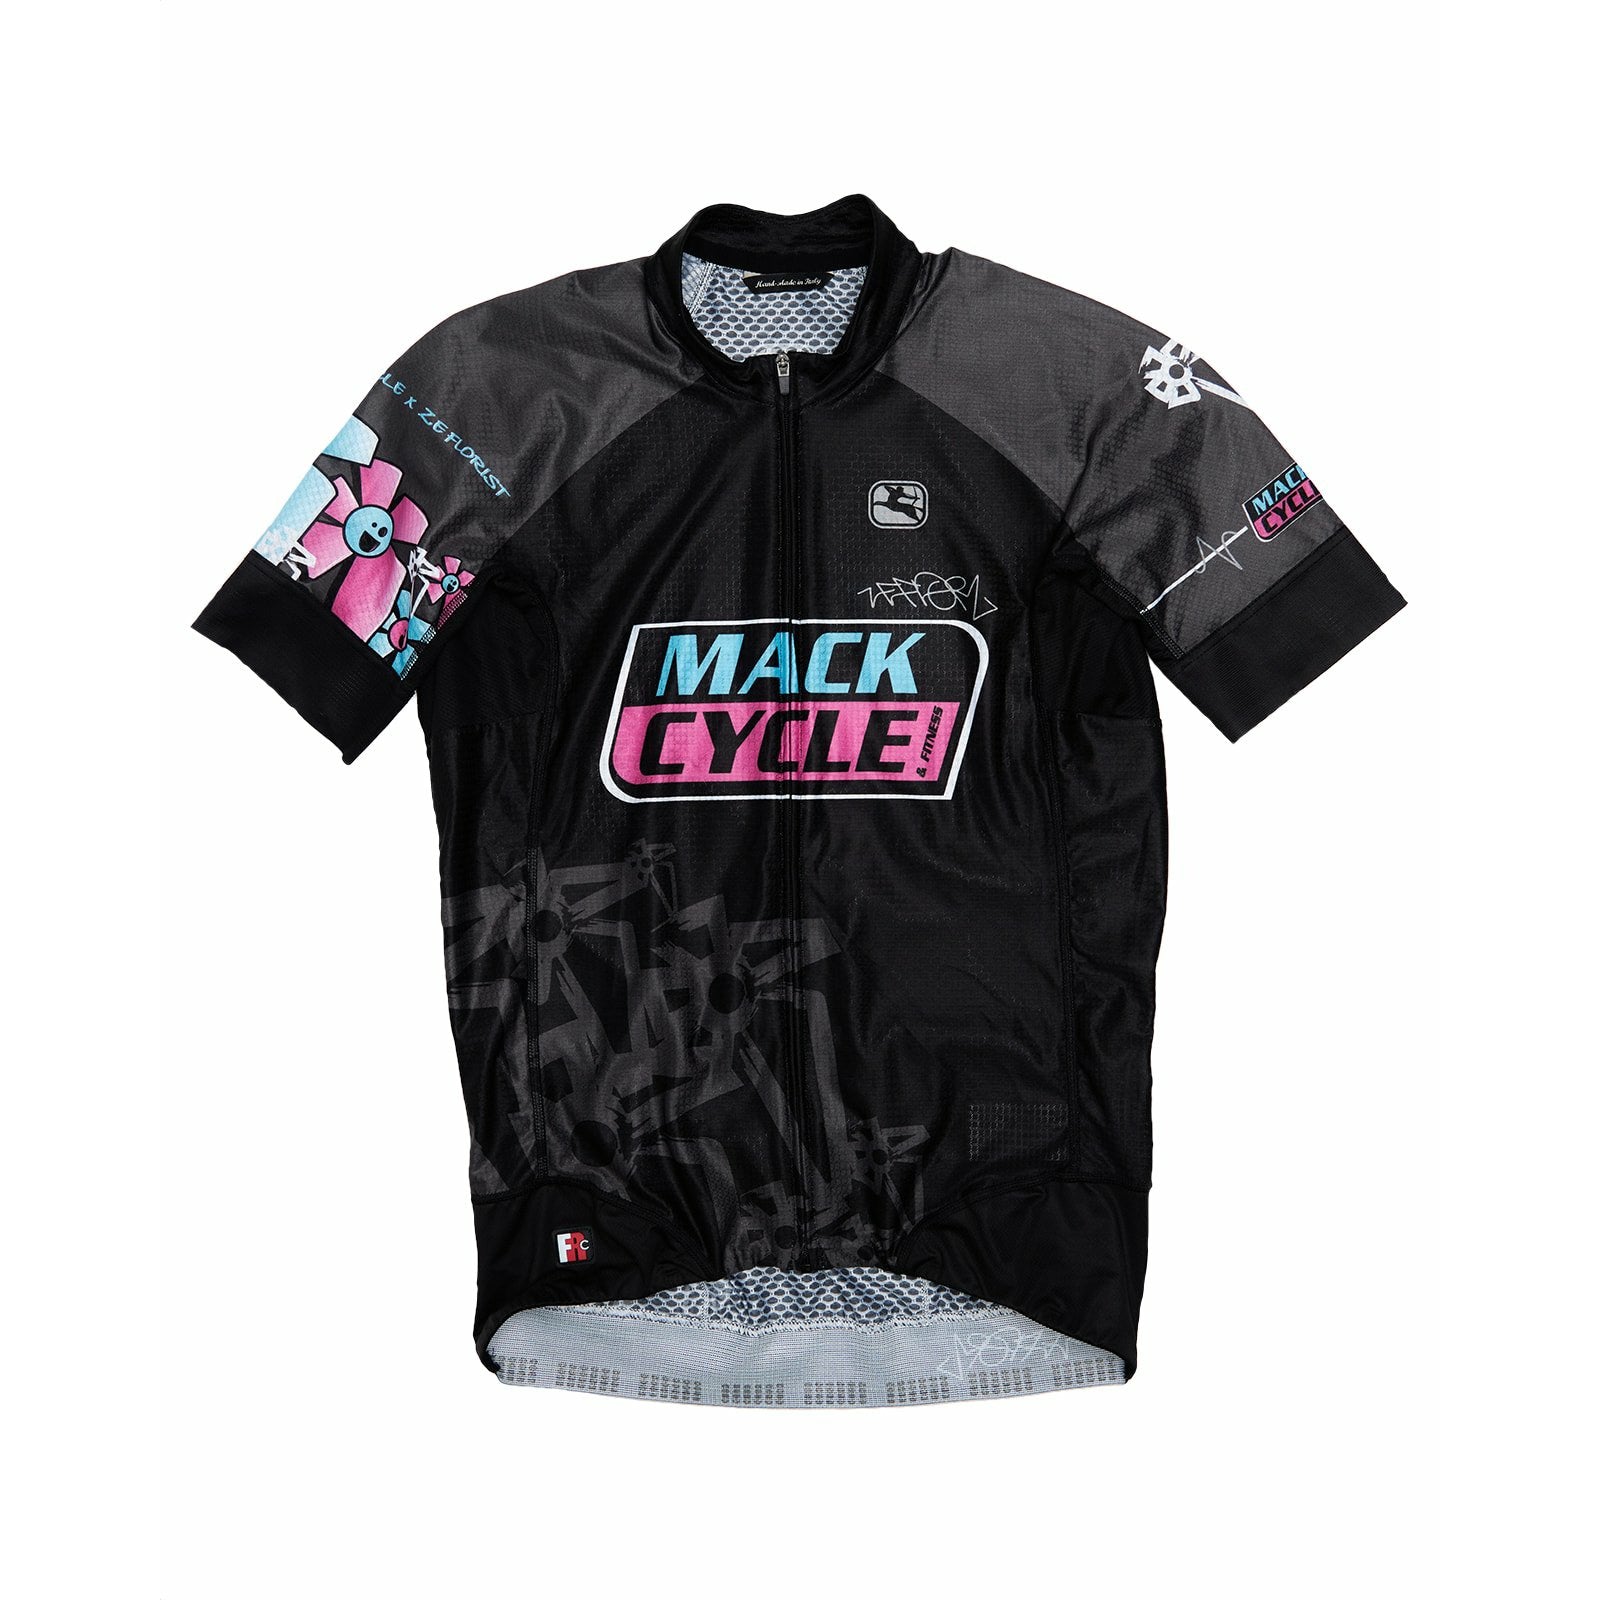 Mack Cycle x ZeFlorist - Women's Jersey - Giordana